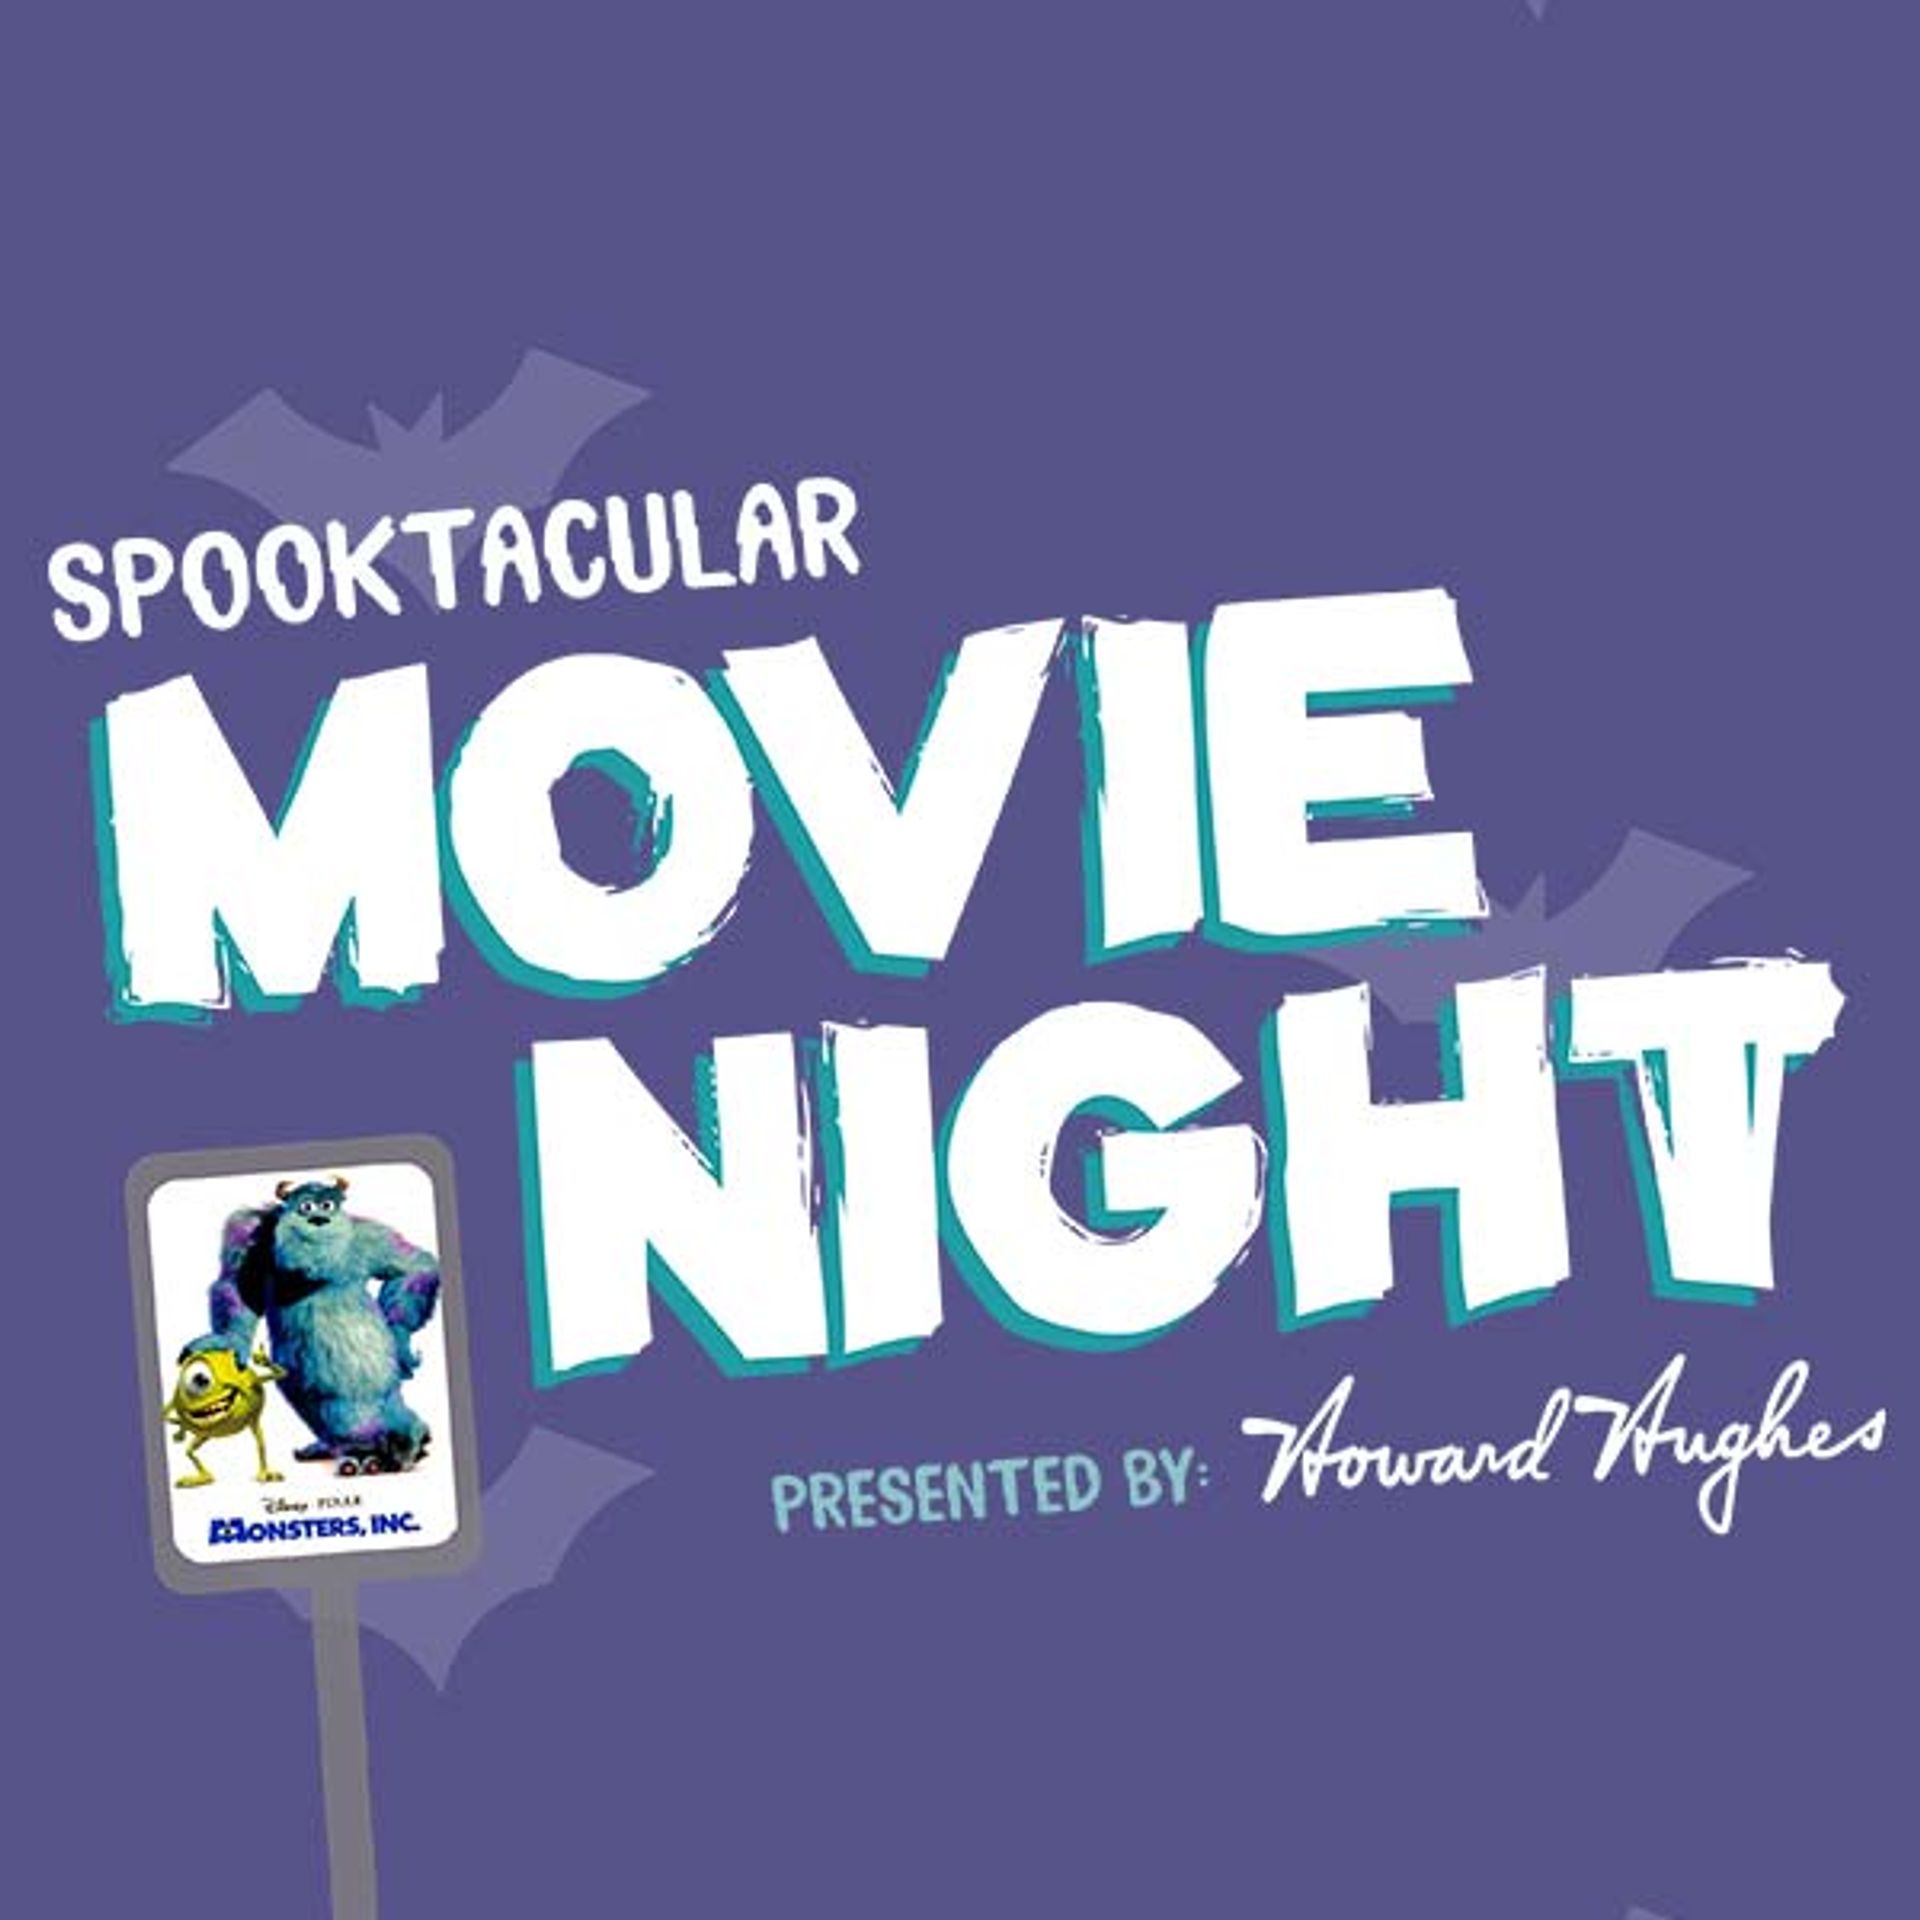 Spooktacular Movie Night